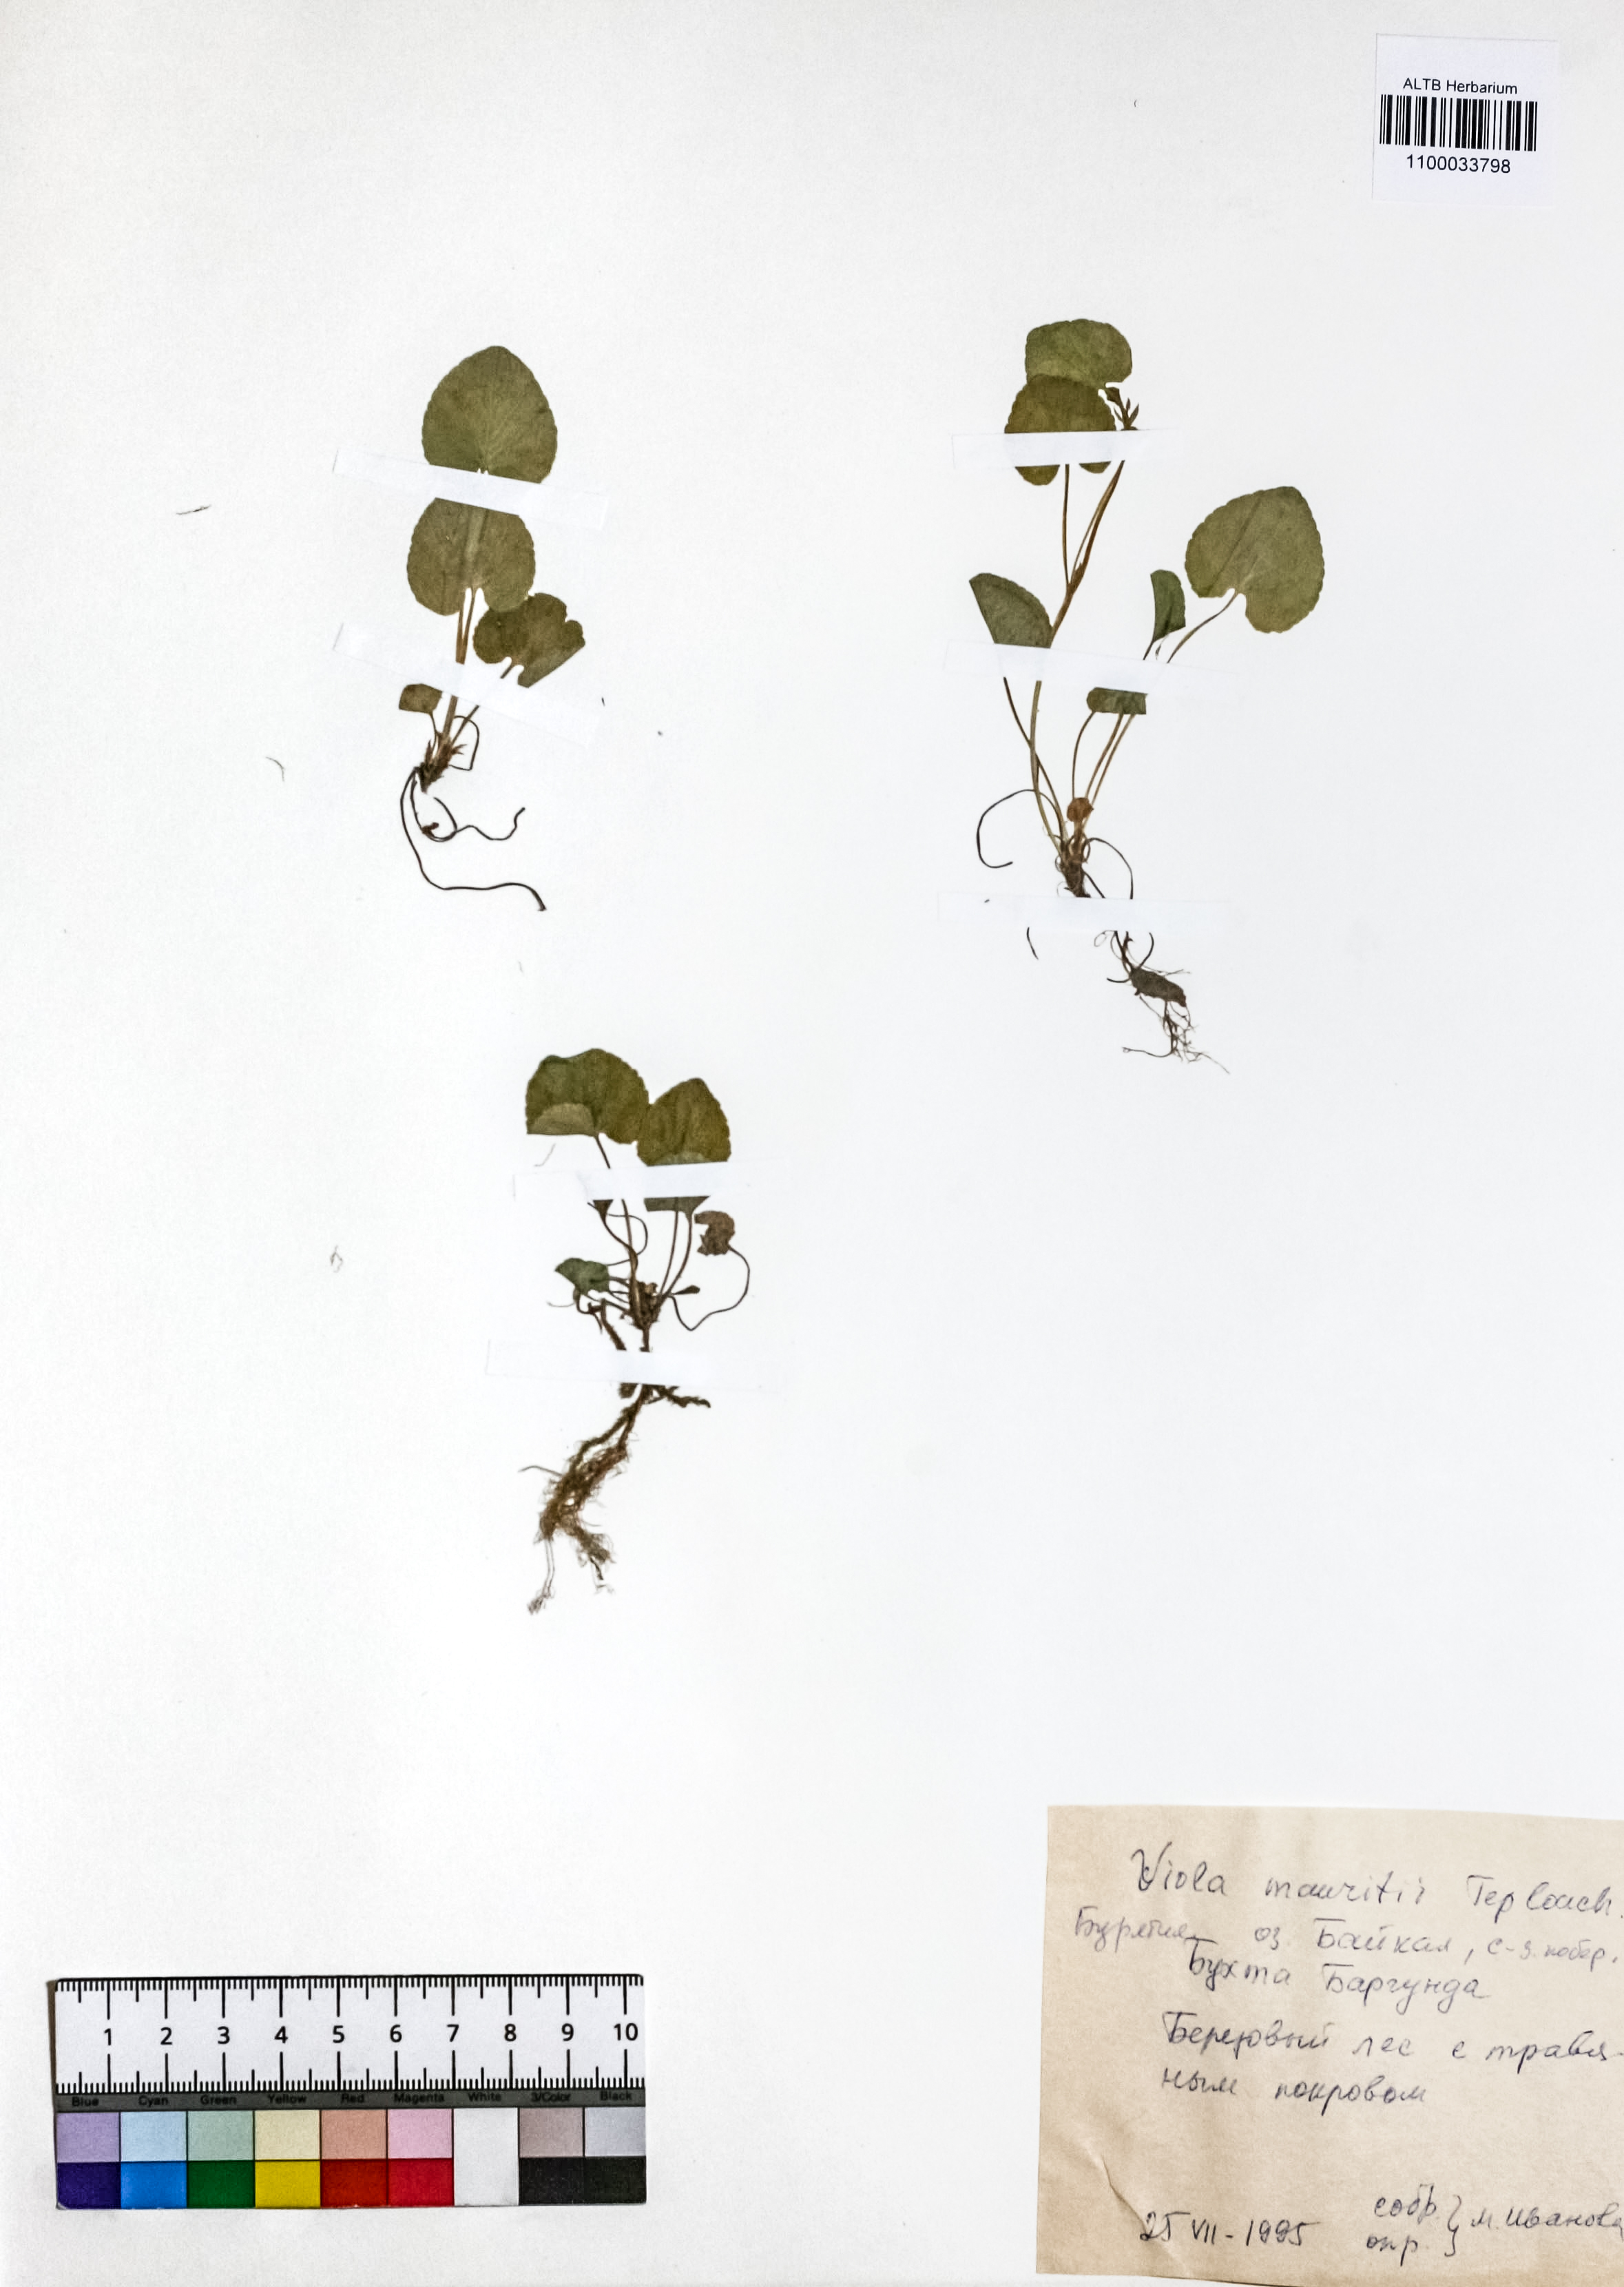 Viola mauritii Teplouchow